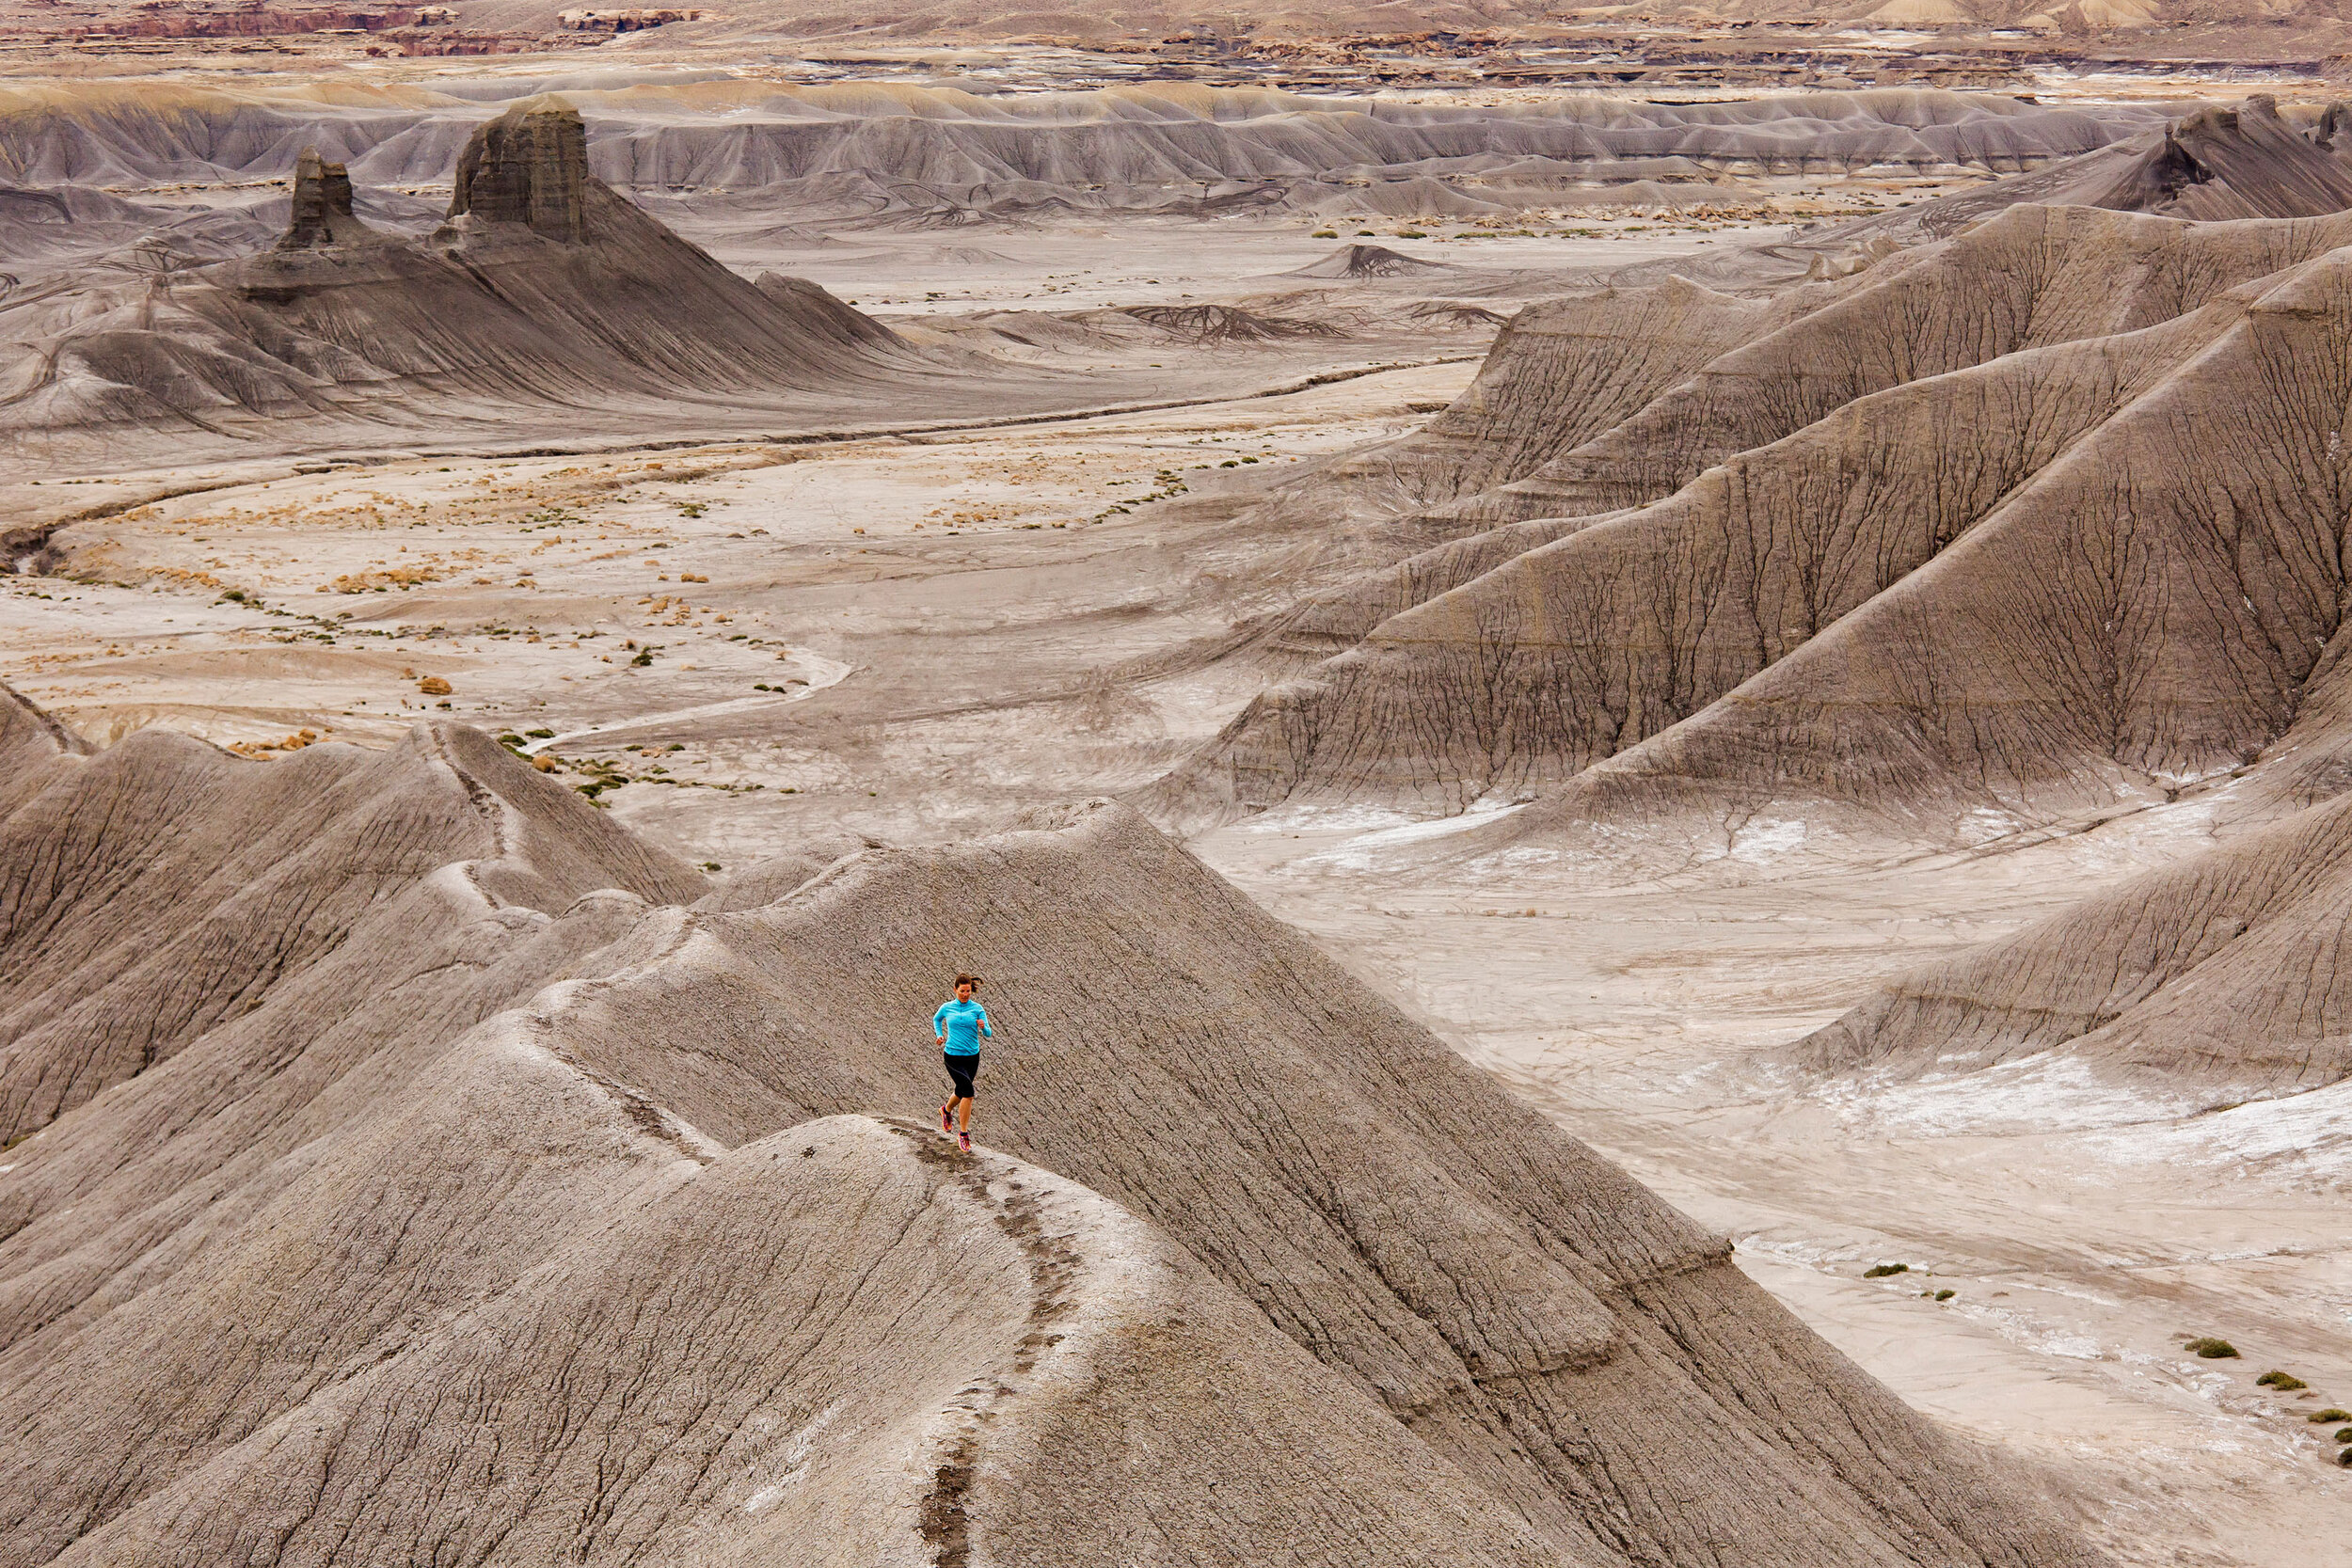  Adventure: Melissa Hagedorn trail running in the Cainville Mesa badlands, Cainville, Utah 